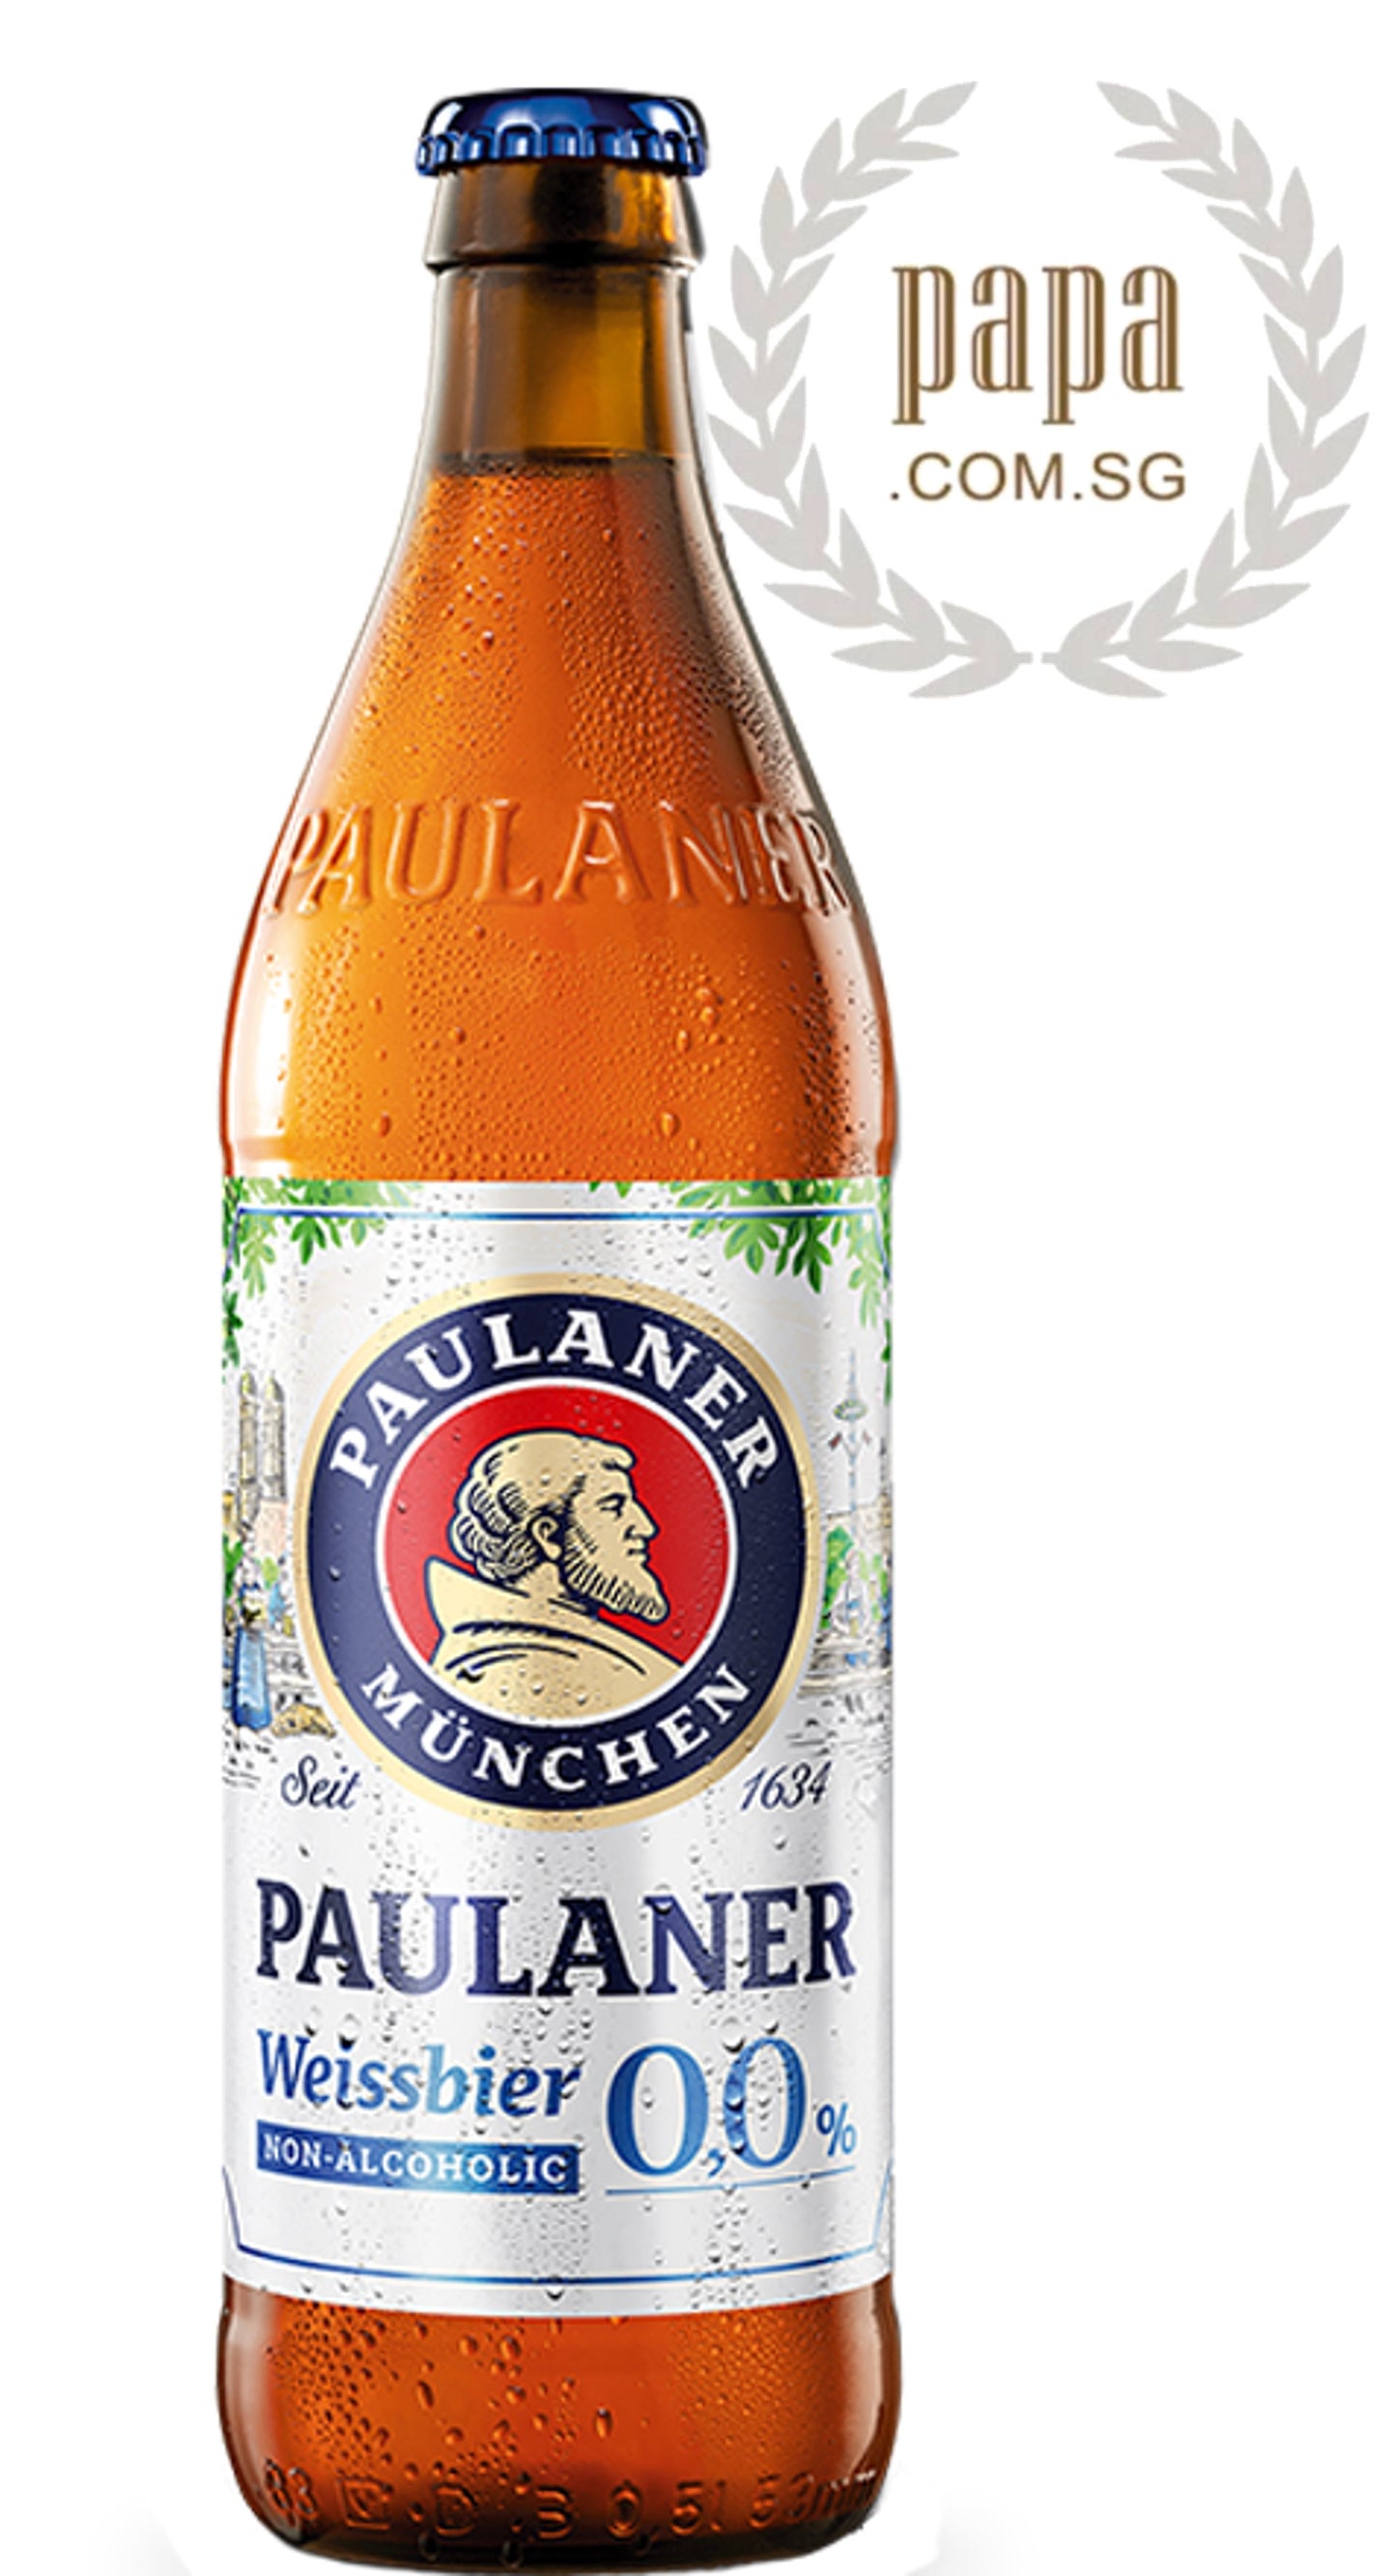 Paulaner Weissbier 0.00% - Alcohol Free